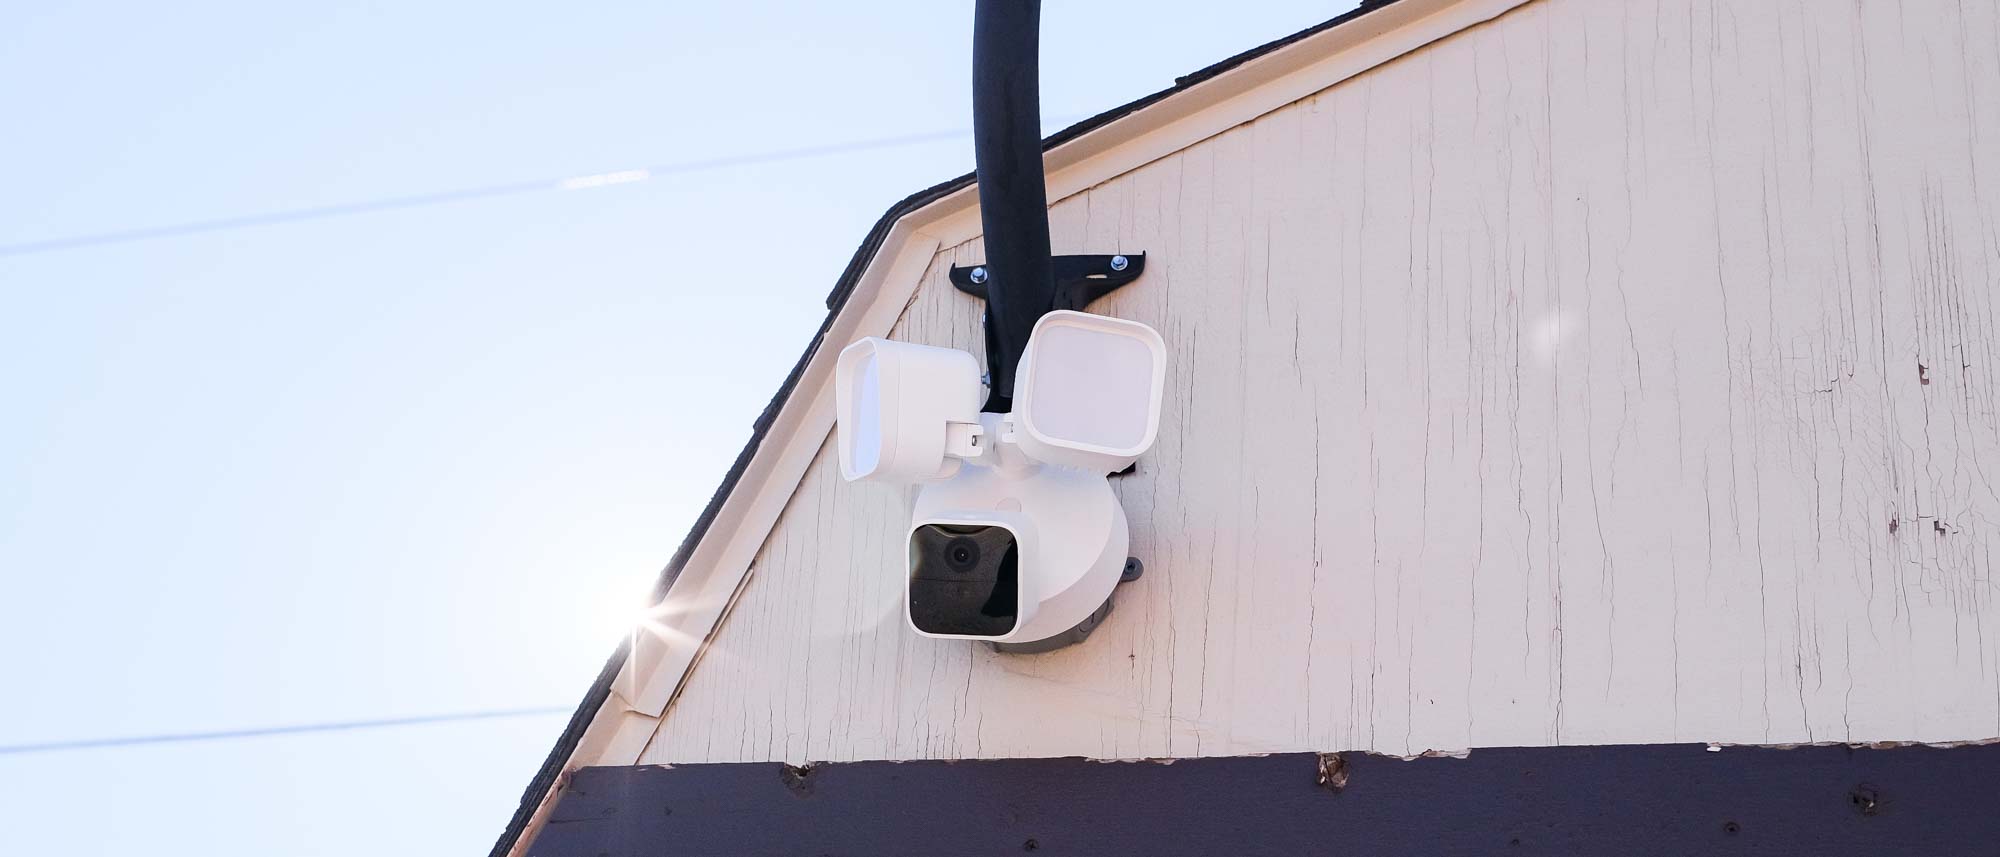 Blink Wired Floodlight Camera - Smart Security Camera, 2600-Lumens